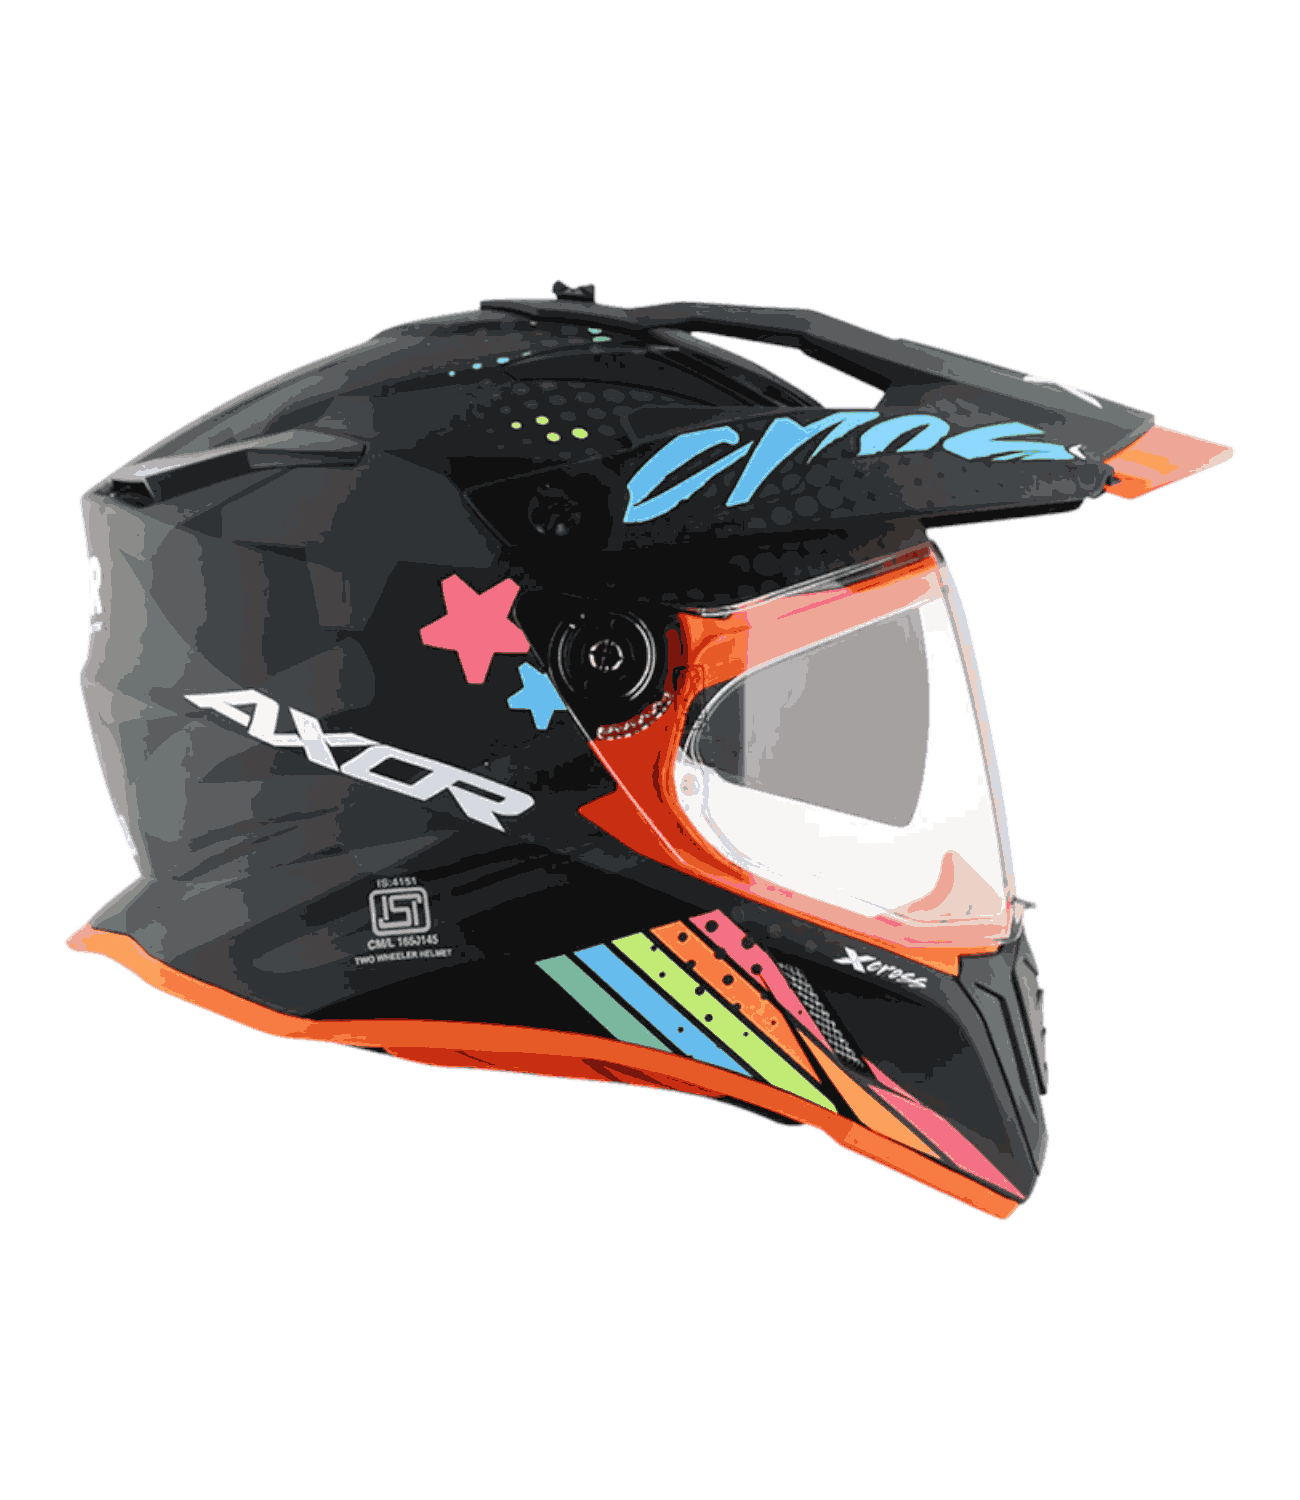 Axor X-Cross X2 Helmet Black Grey - Without Visor